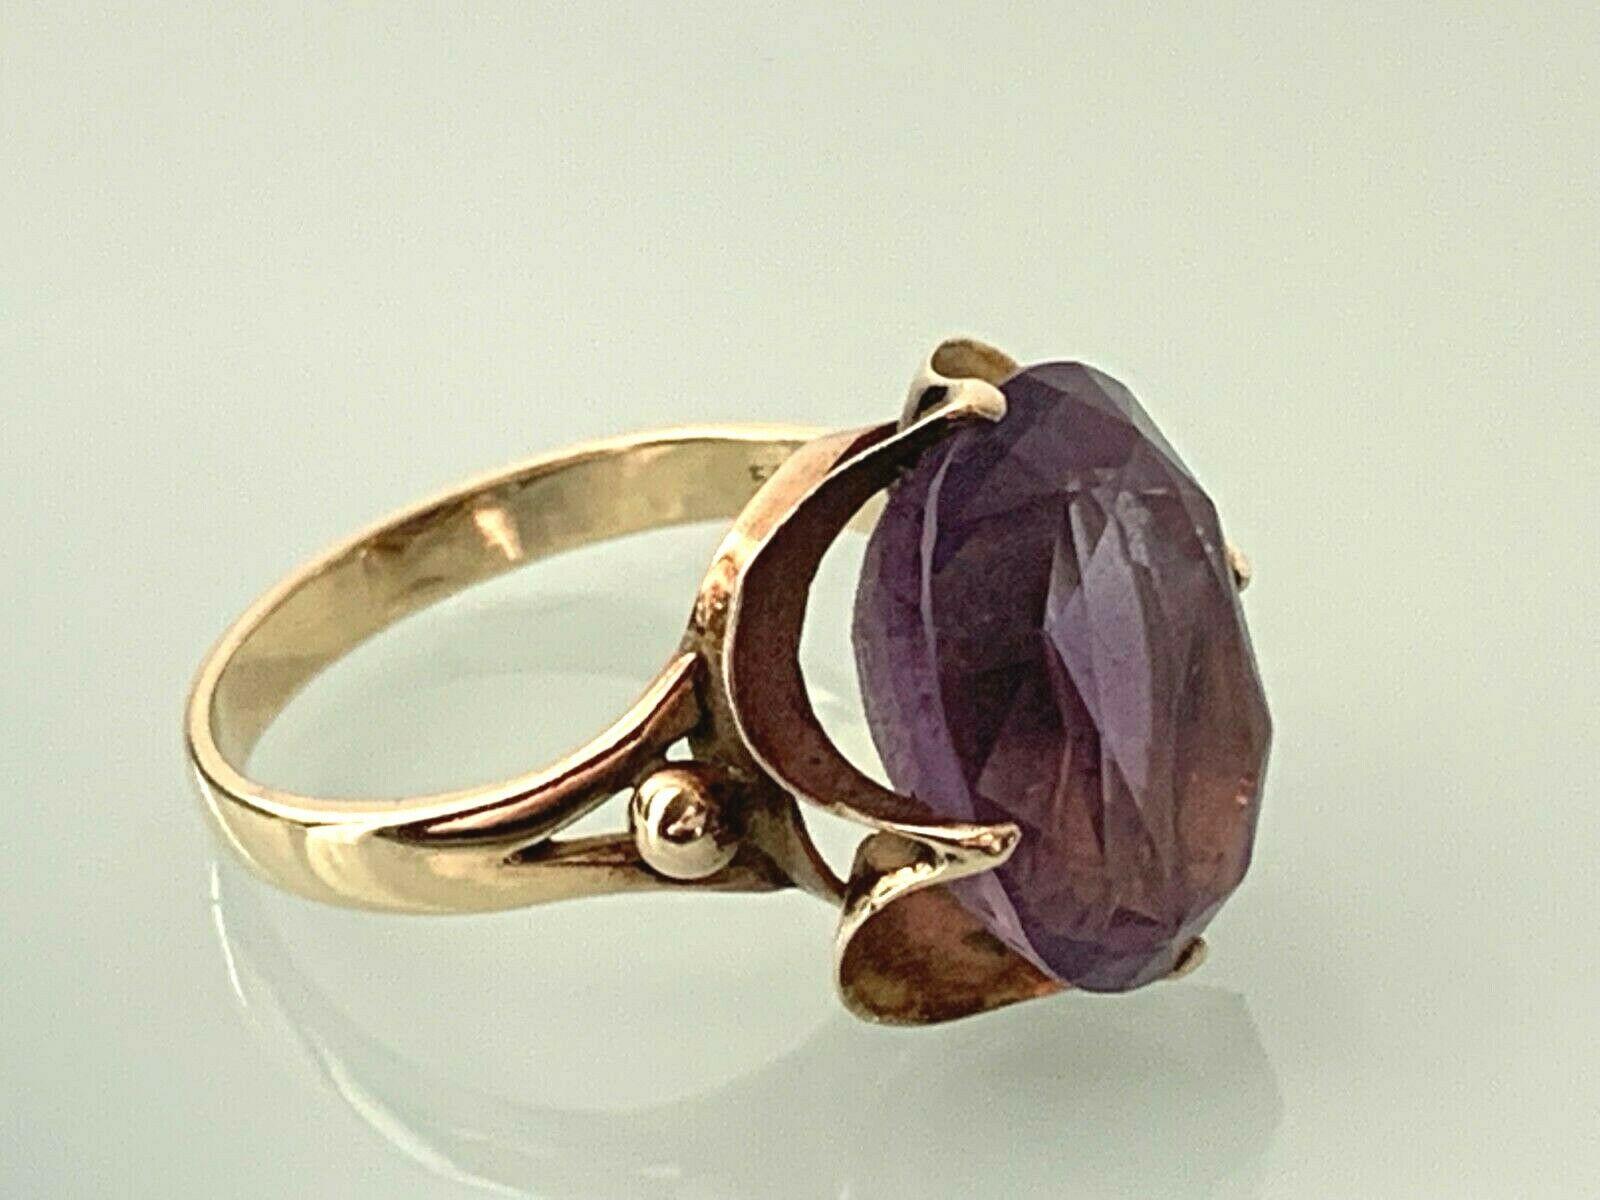 14ct 585 Gold  Purple Gem Stone Ring
Size of Stone 16mm x 12mm  
**unknown purple stone**
Era Late 20th Century 
Stamped 585 inside of Band

U.S Size 7 1/2
 
U.K Size P = 17.75 mm inner diametre